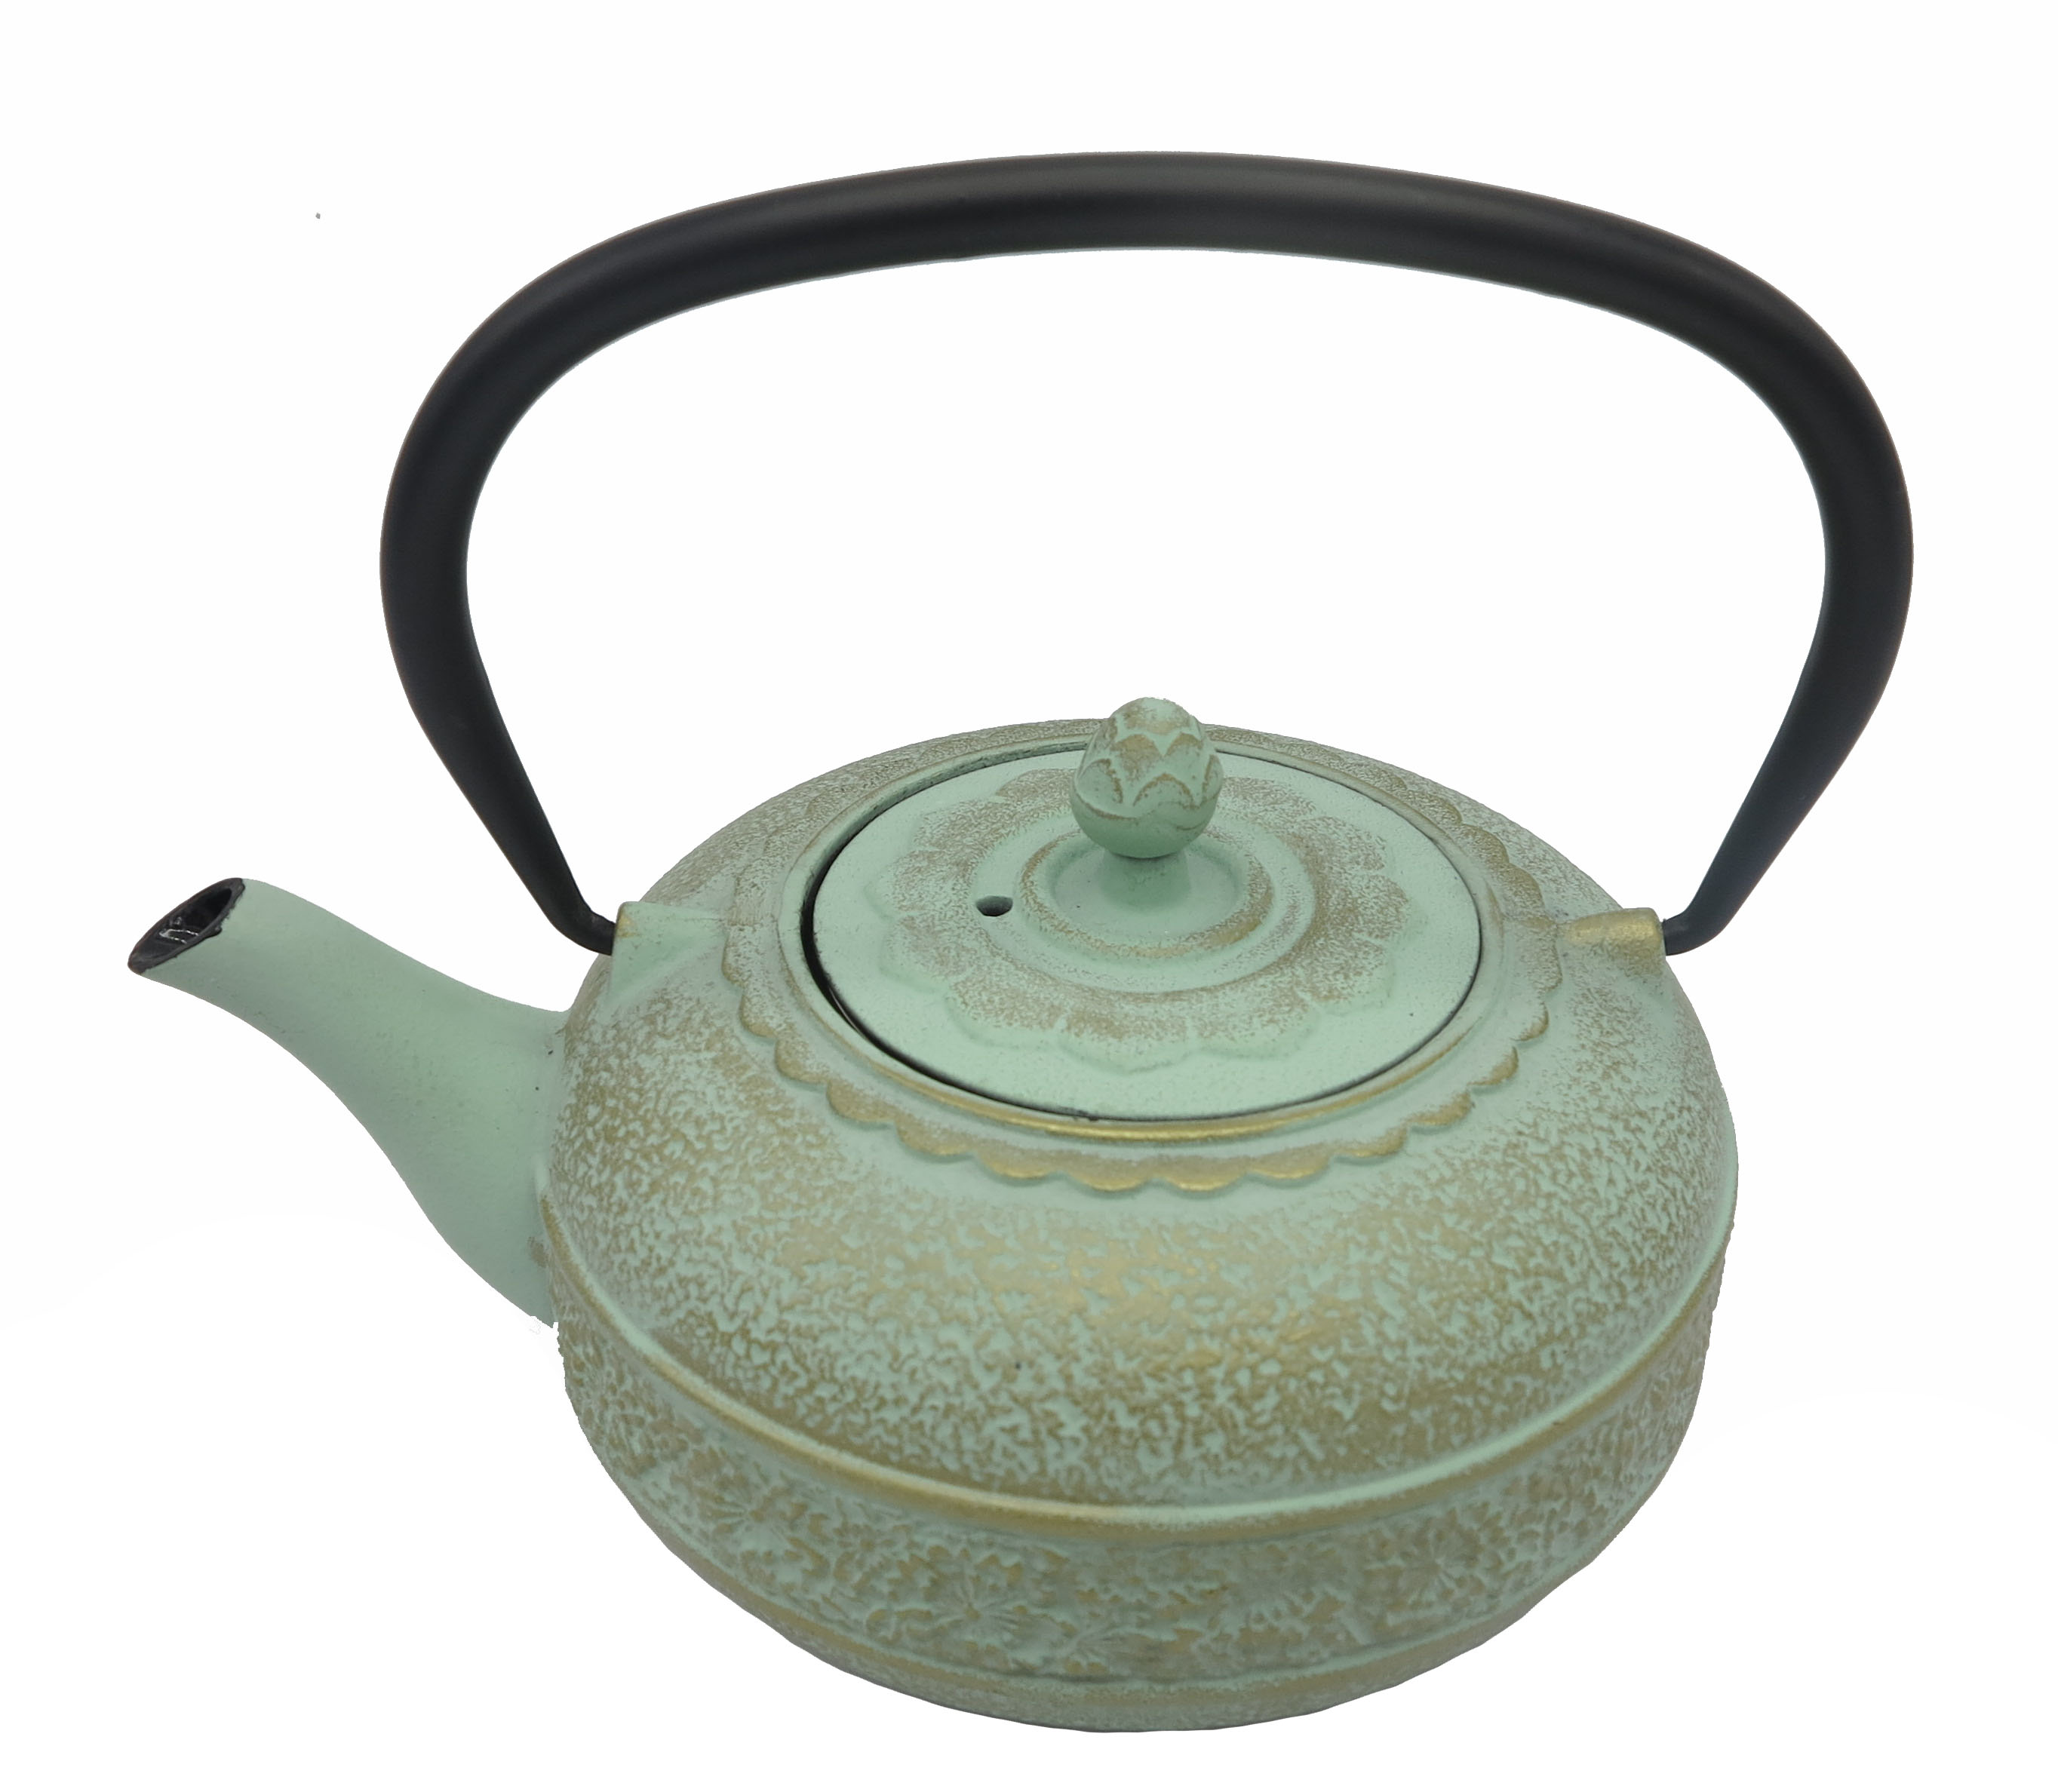 Enamel antique cast iron teapot green cast iron teapot